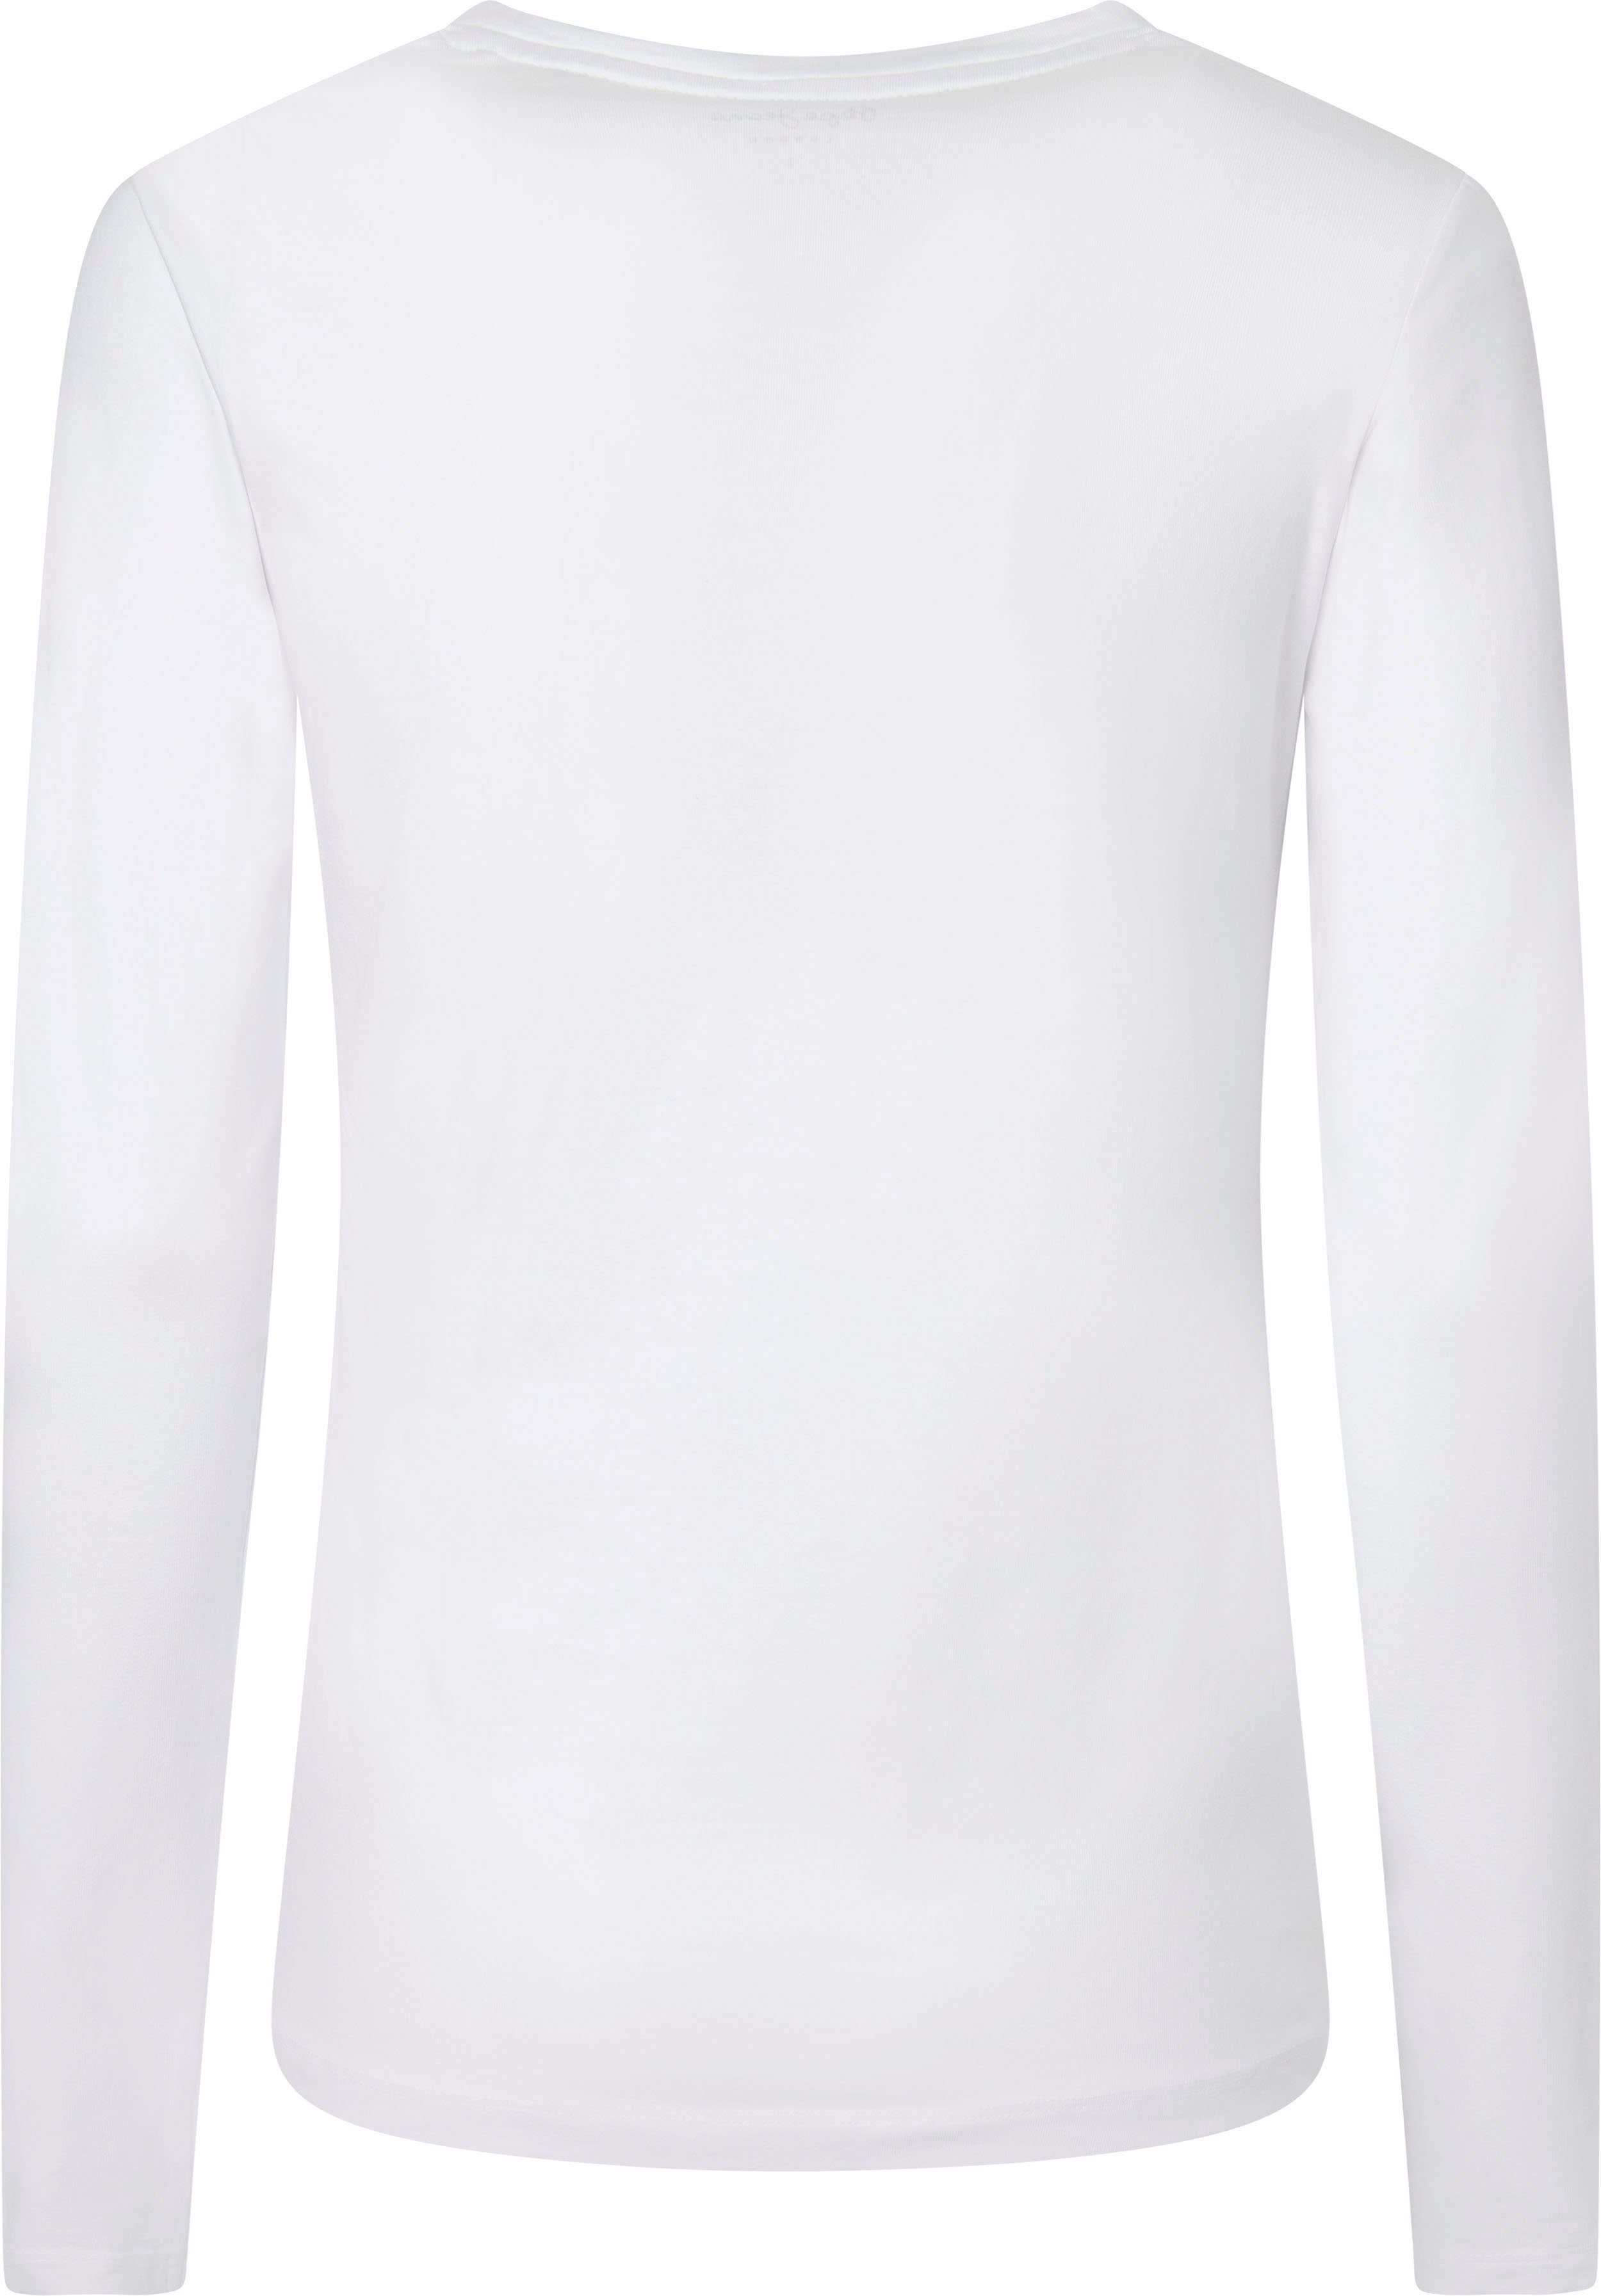 8WHITE kleinem AMBERTA Marken-Logo-Print Langarmshirt N im Pepe Jeans mit Brustbereich